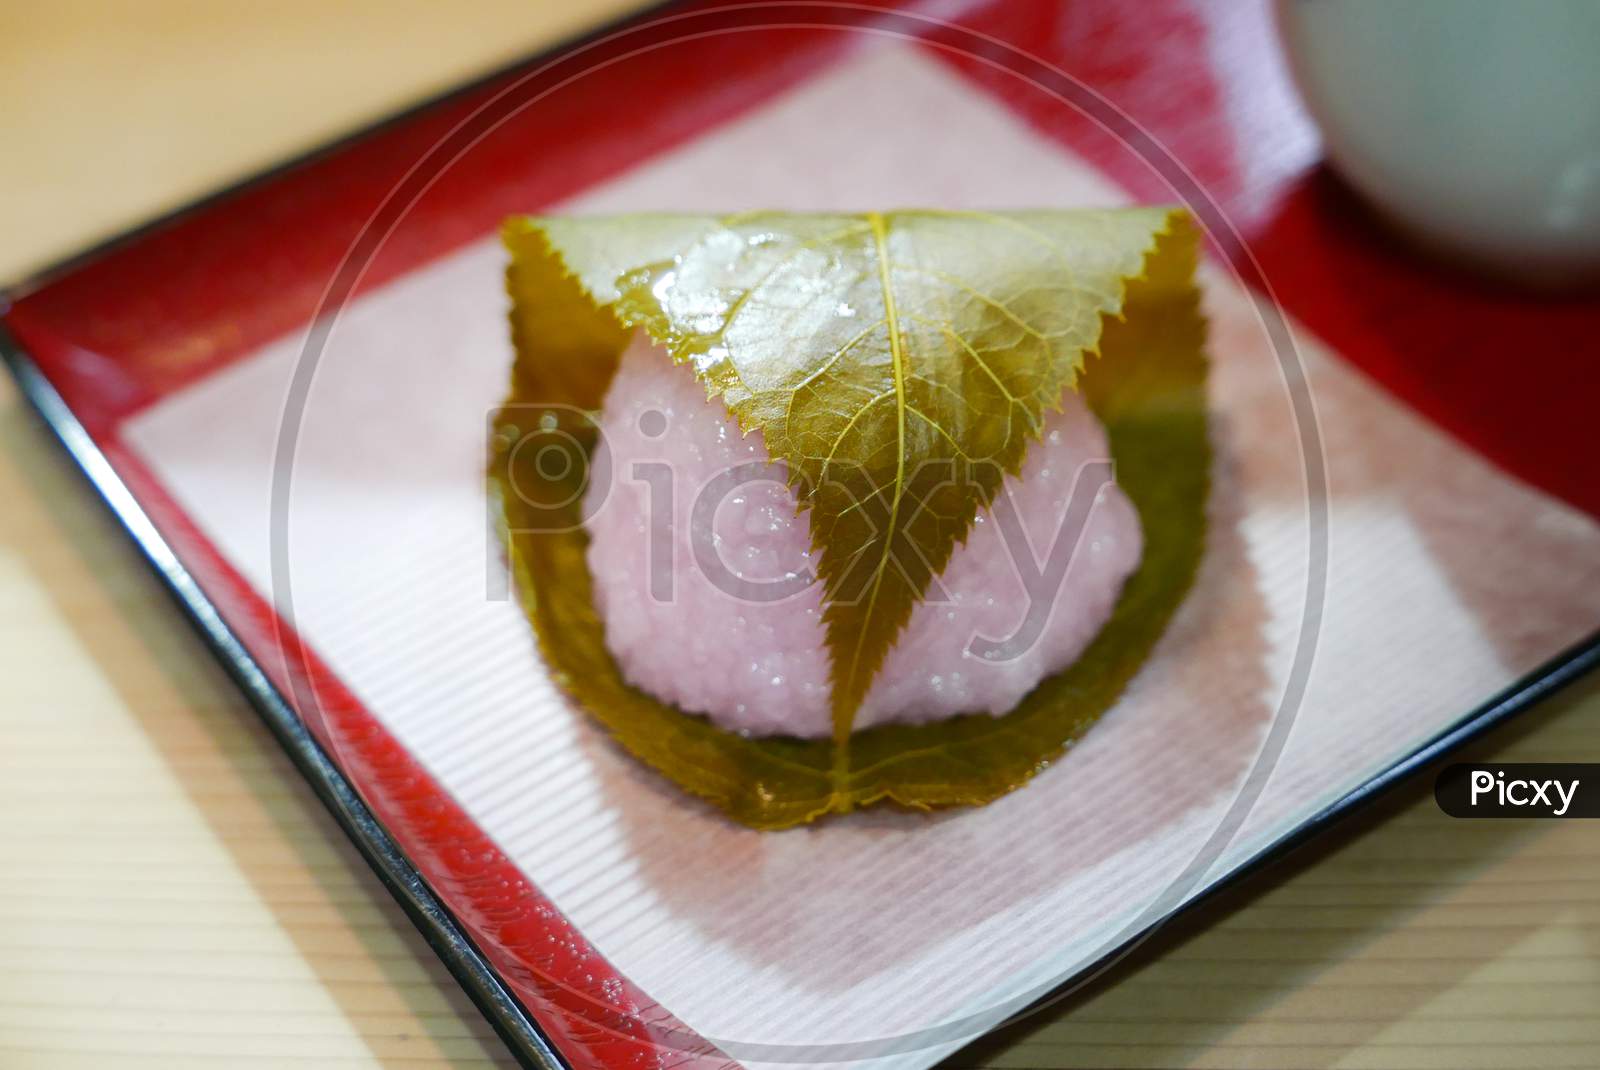 Sakura mochi wrap with sakura leaf pickle, a delicacy sweet treat in Japan during sakura blossom season